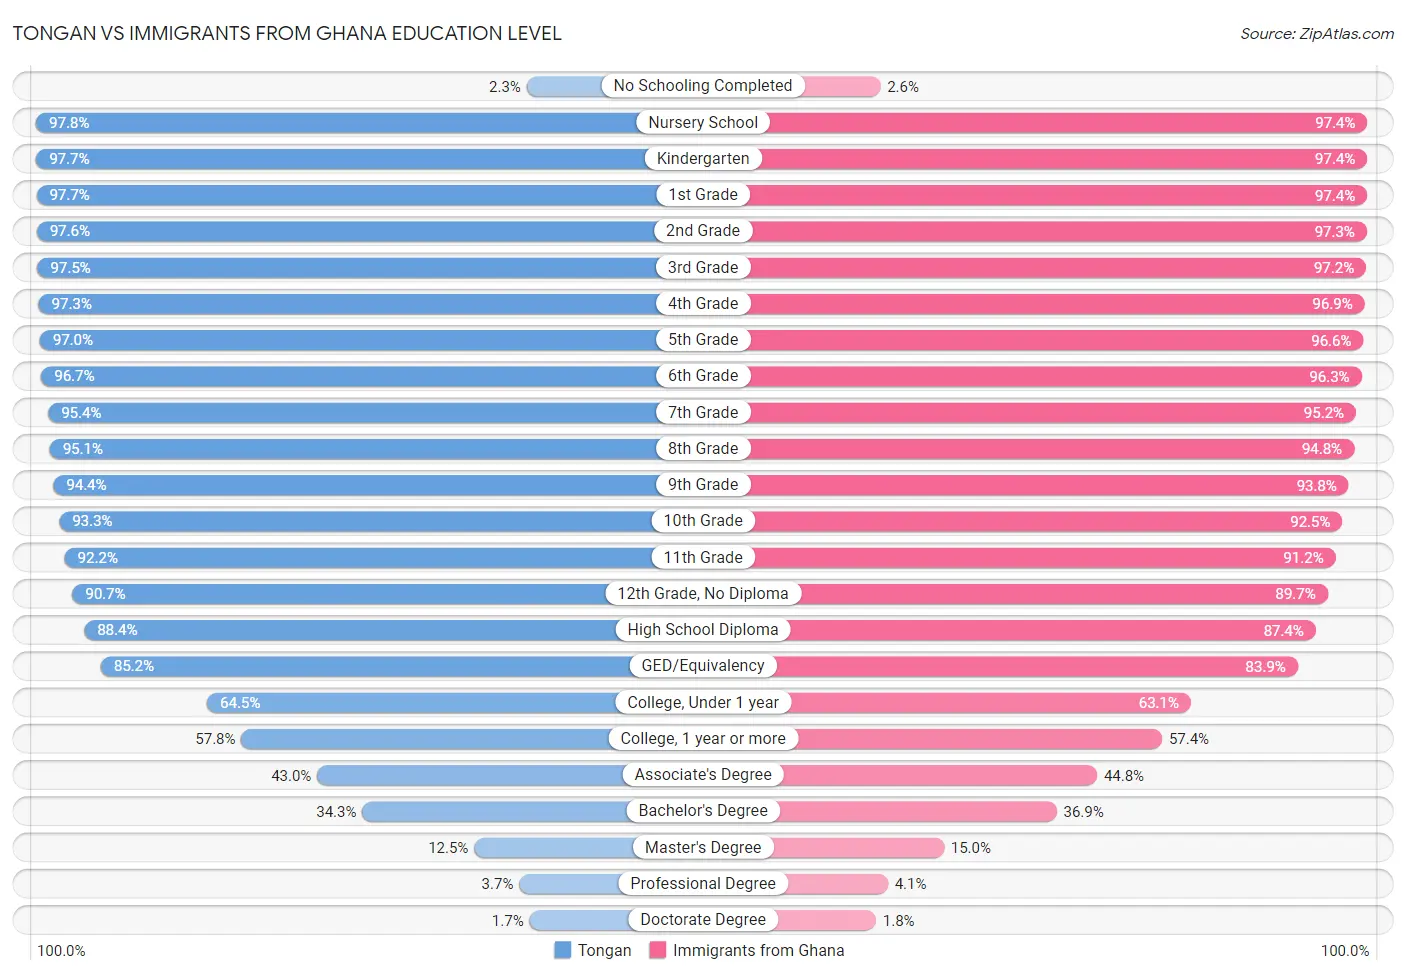 Tongan vs Immigrants from Ghana Education Level